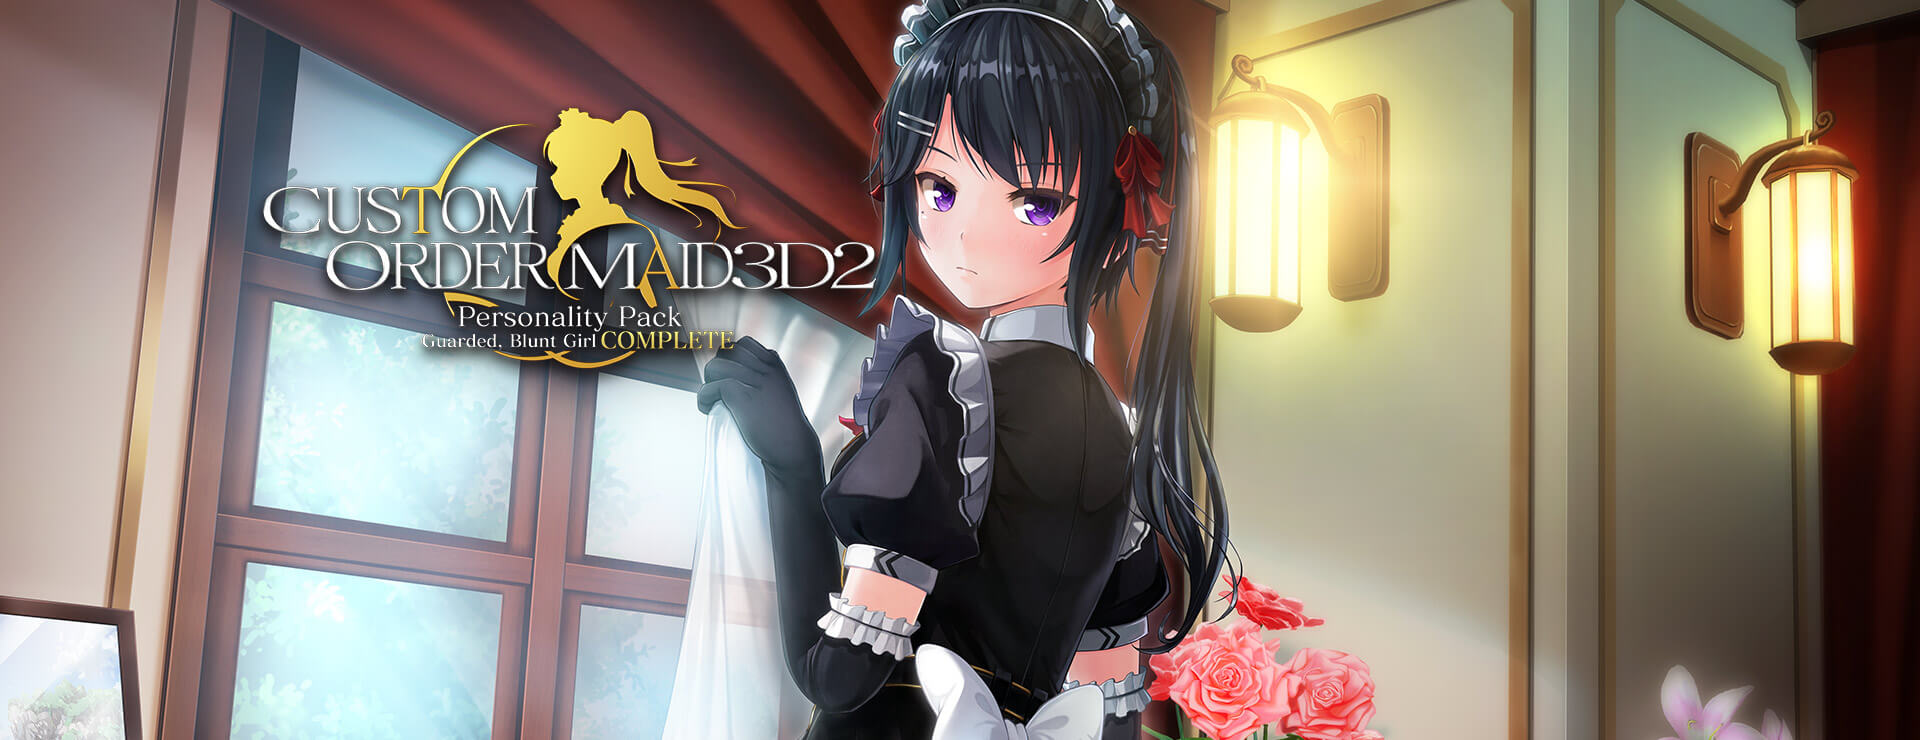 Custom Order Maid 3D2 Guarded, Blunt Girl Complete Bundle - Simulation Game